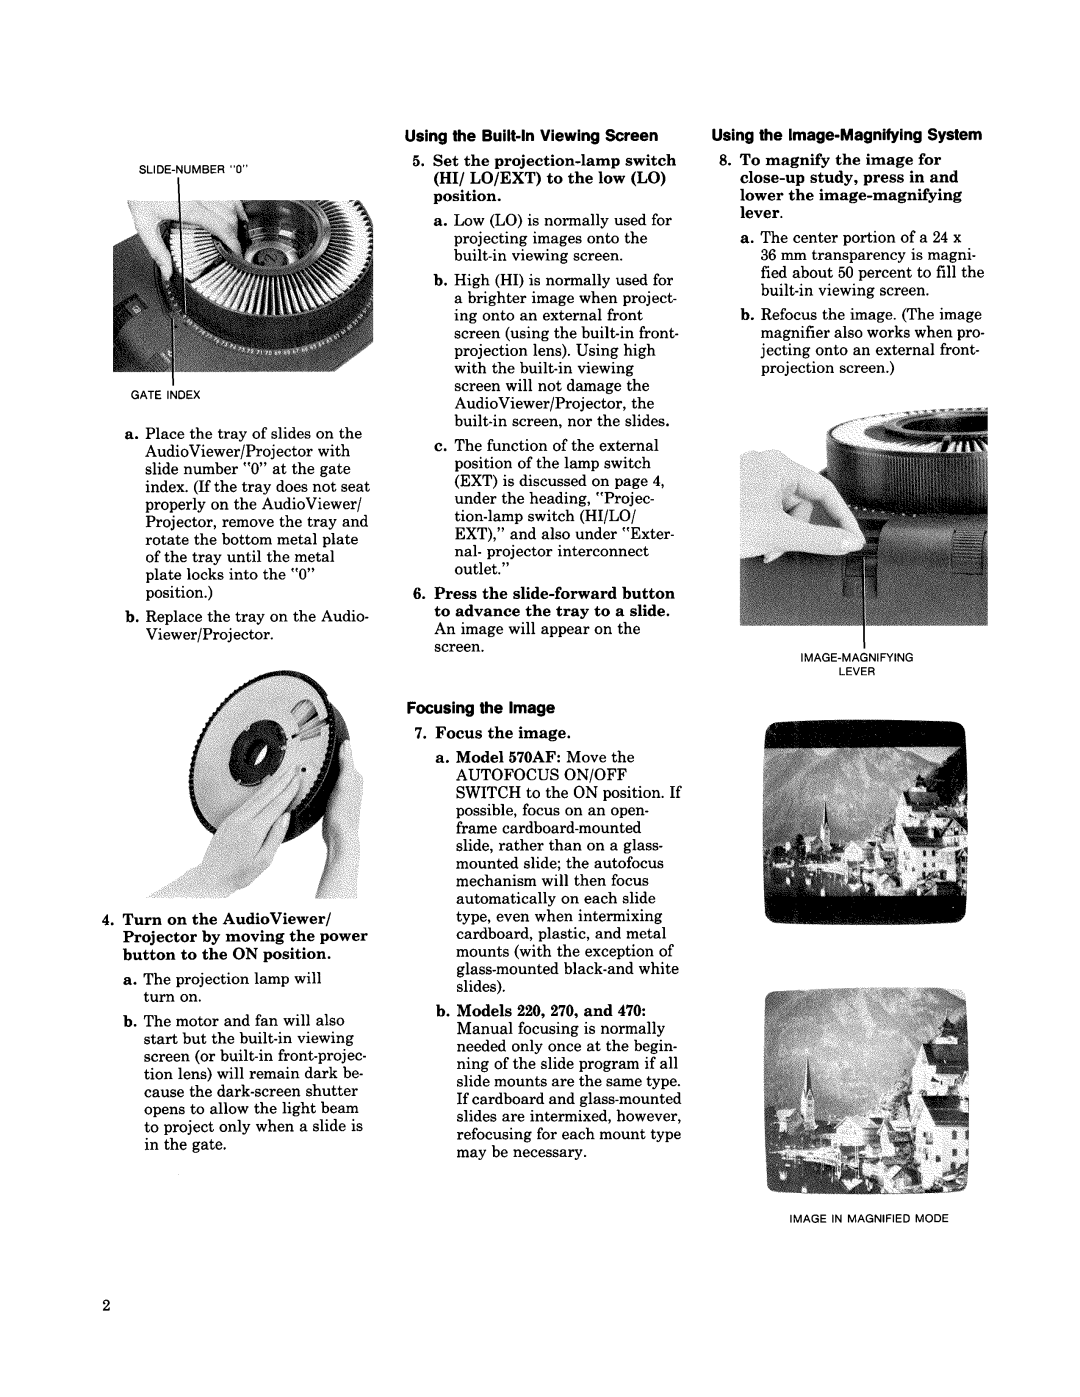 Kodak 470, 570AF, 220, 270 manual 